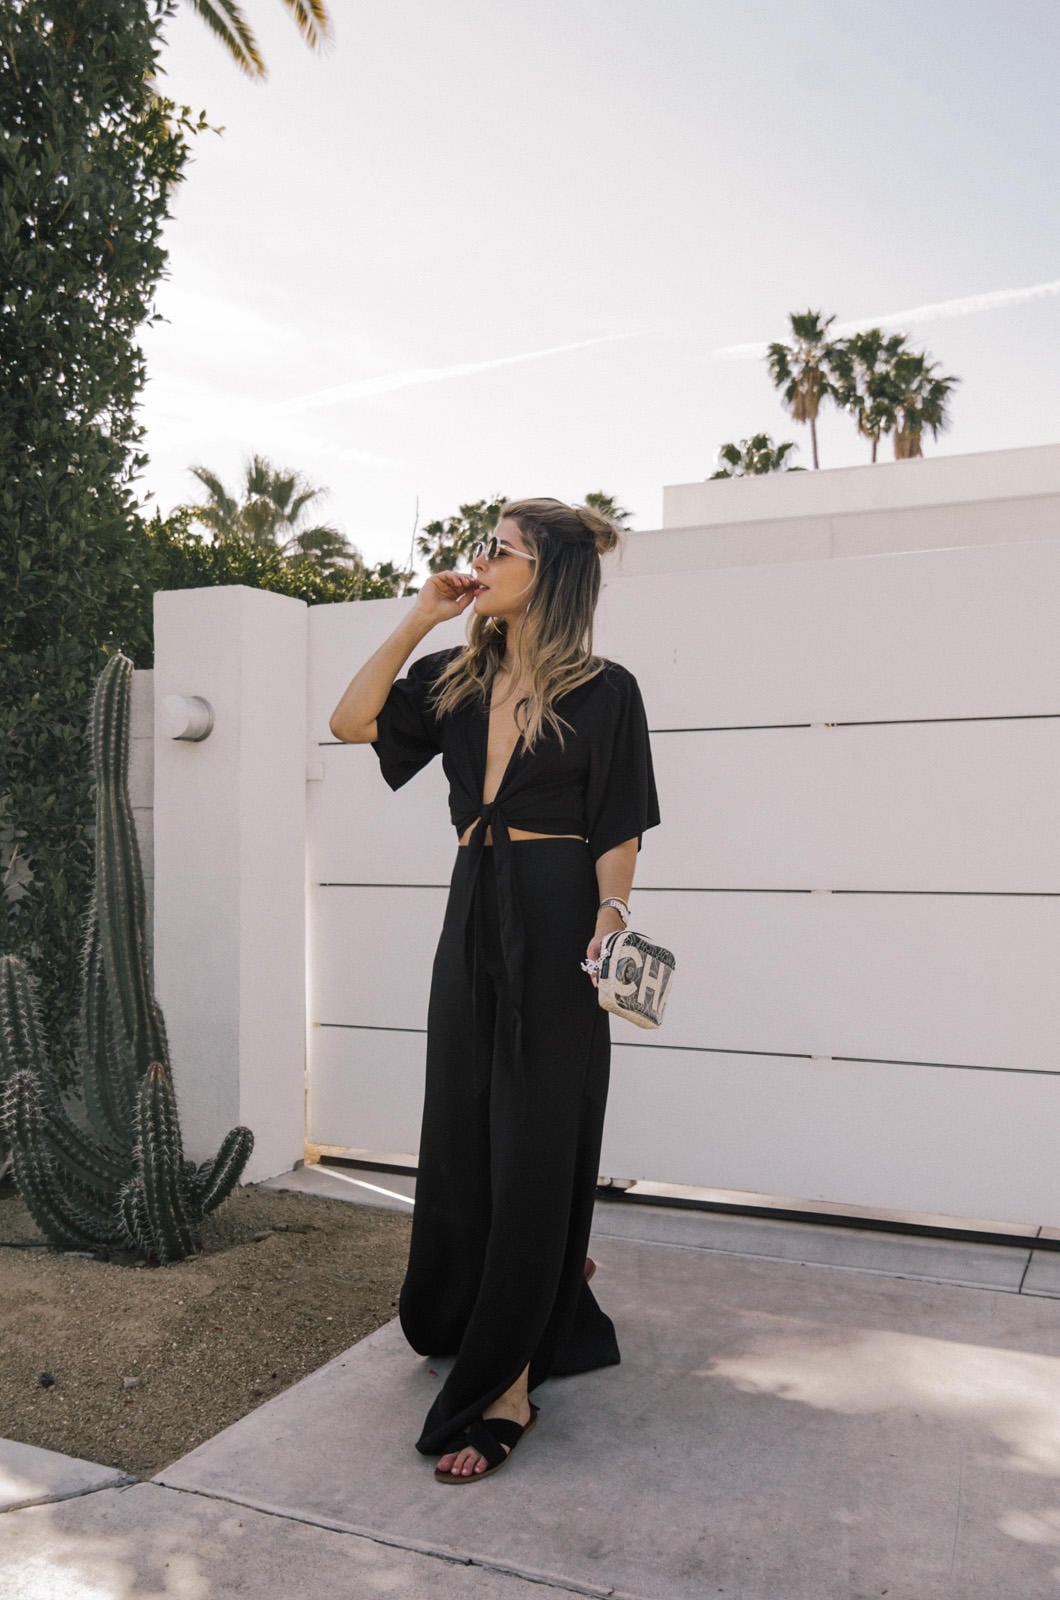 Chanel Black and White Bag, The Camera Handbag, Chanel quilted camera bag, Pat Hetlinger Coachella Style, Pam Hetlinger Outfits | TheGirlFromPanama.com